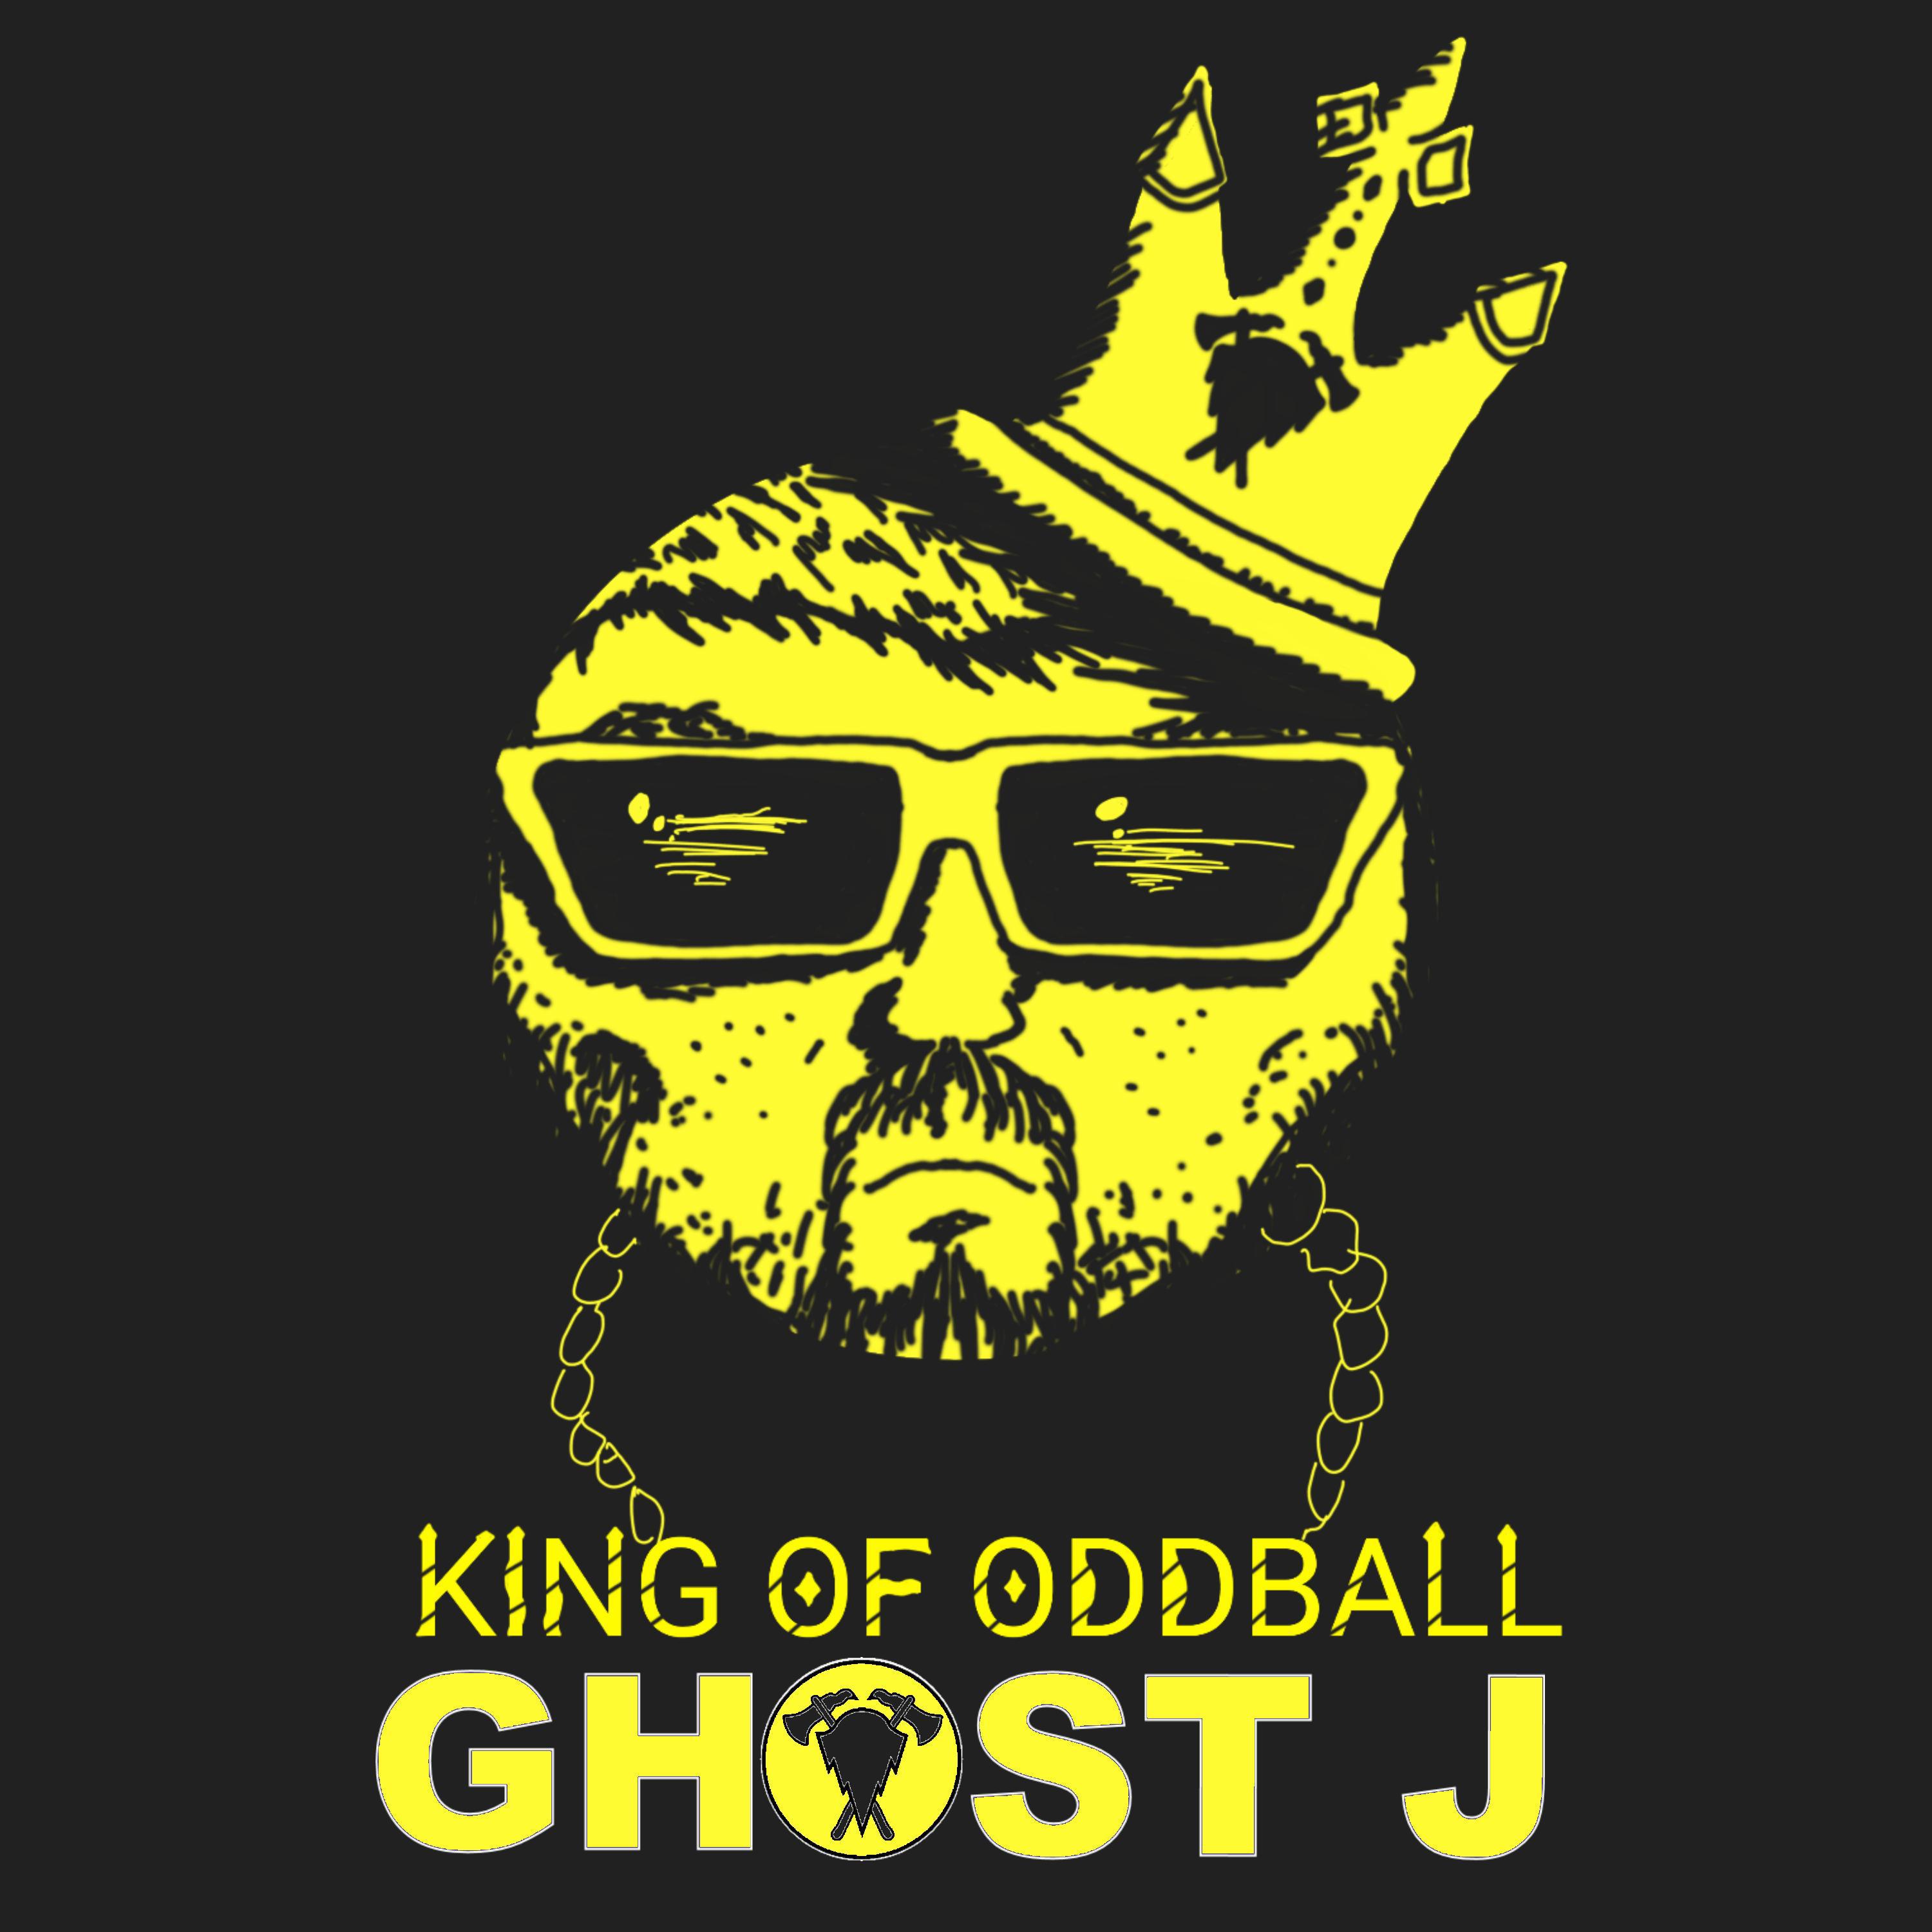 Ghost J - King of oddball